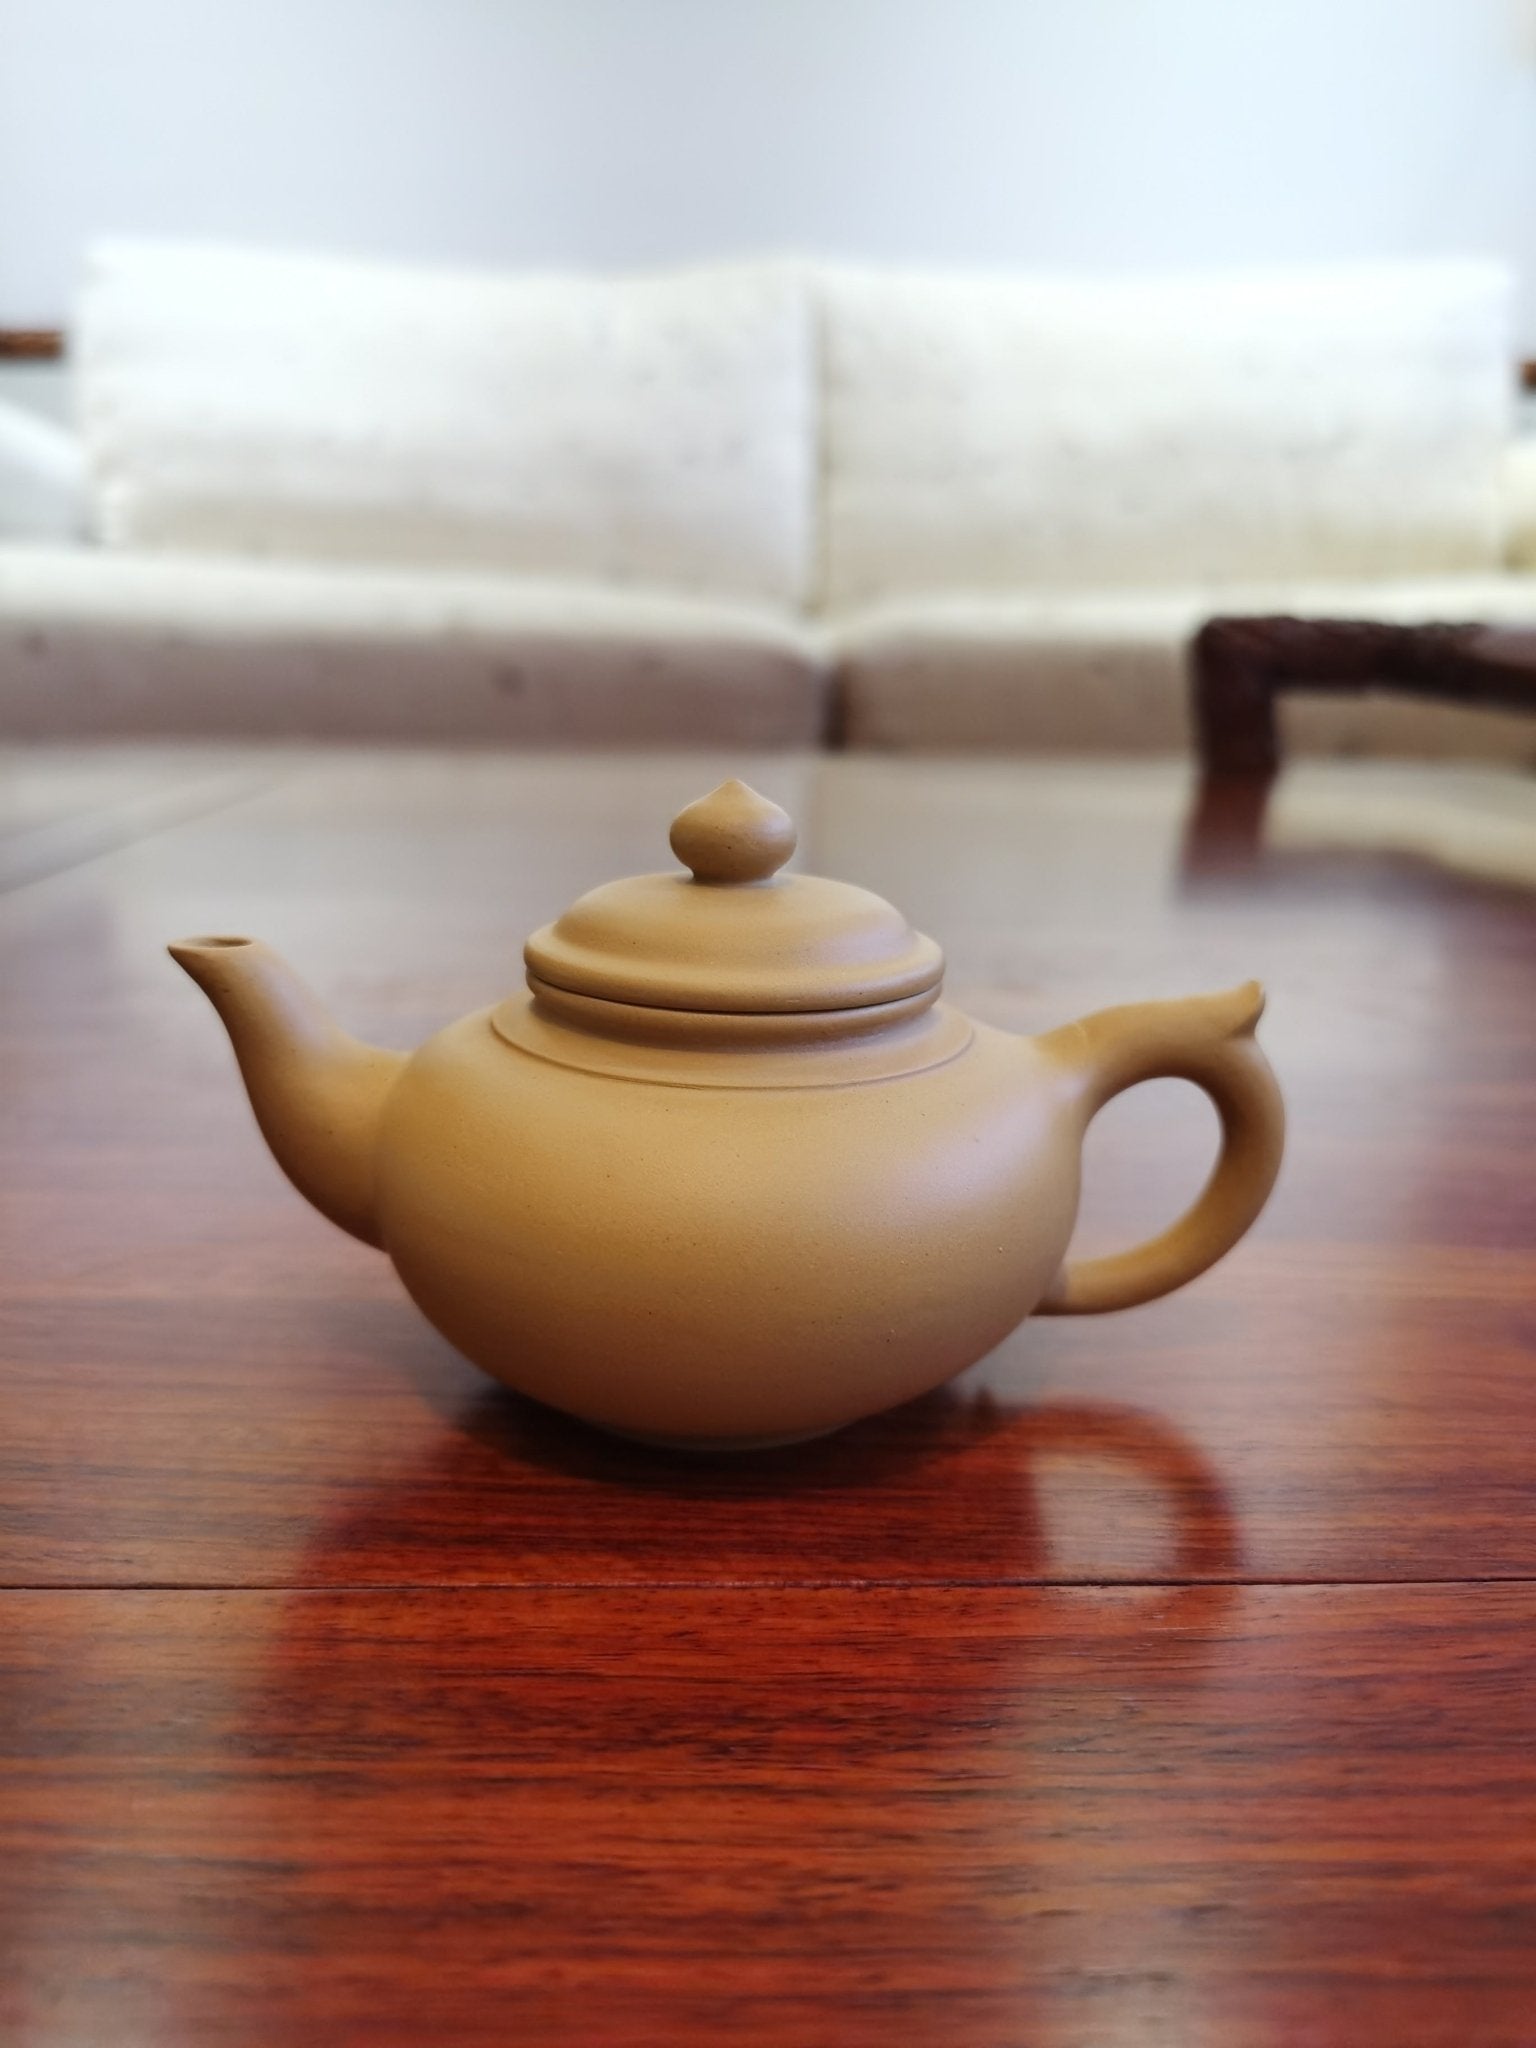 Siyutao Teapot The XiaoYing 笑樱 ,80ml &95ml, Full handmade by master artist Wei Ren 任伟, Gu Fa Lian ni (Most Archaic Clay Forming) Golden yellow DuanNi clay aged 32 years - SiYuTao Teapot